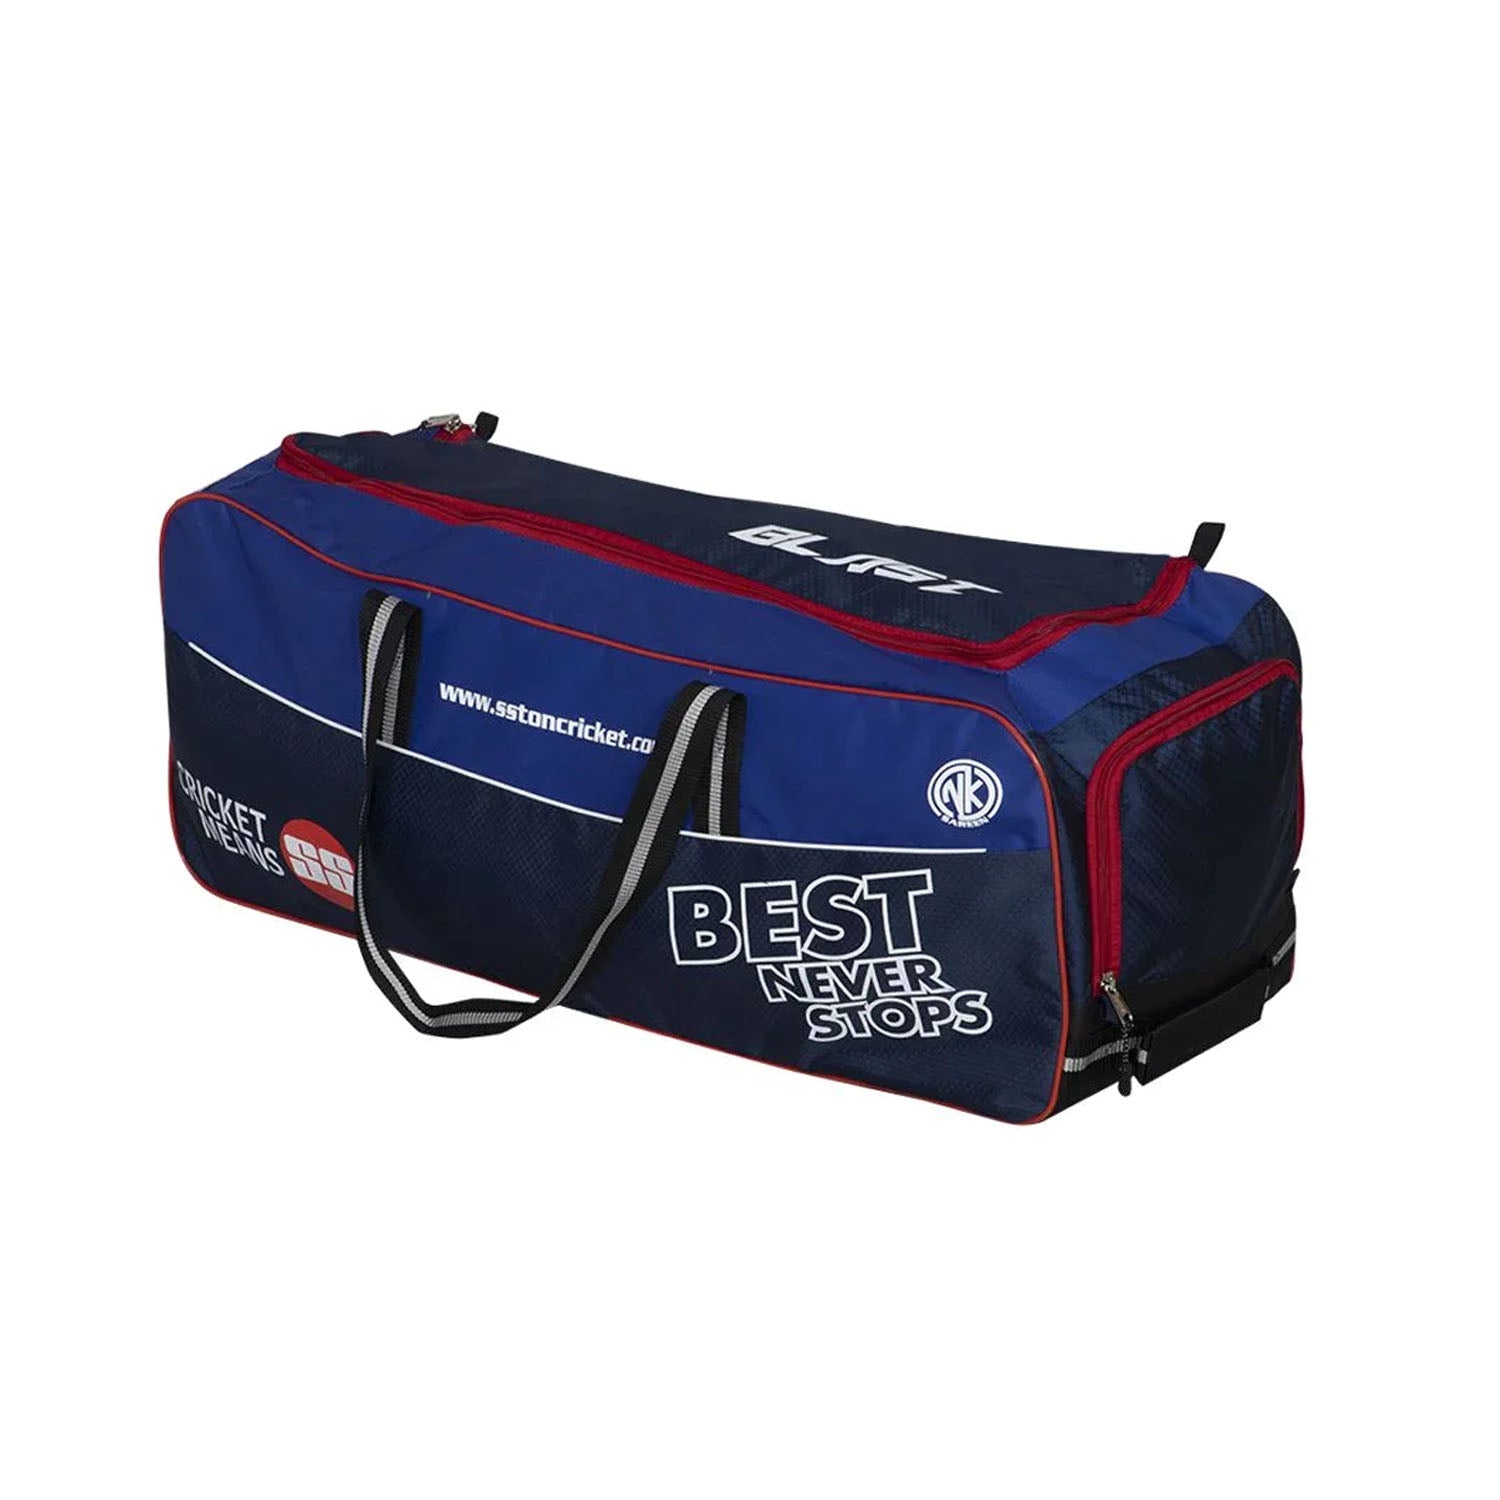 SS Blast Cricket Kit Bag with Wheels - Blue/Black - Best Price online Prokicksports.com